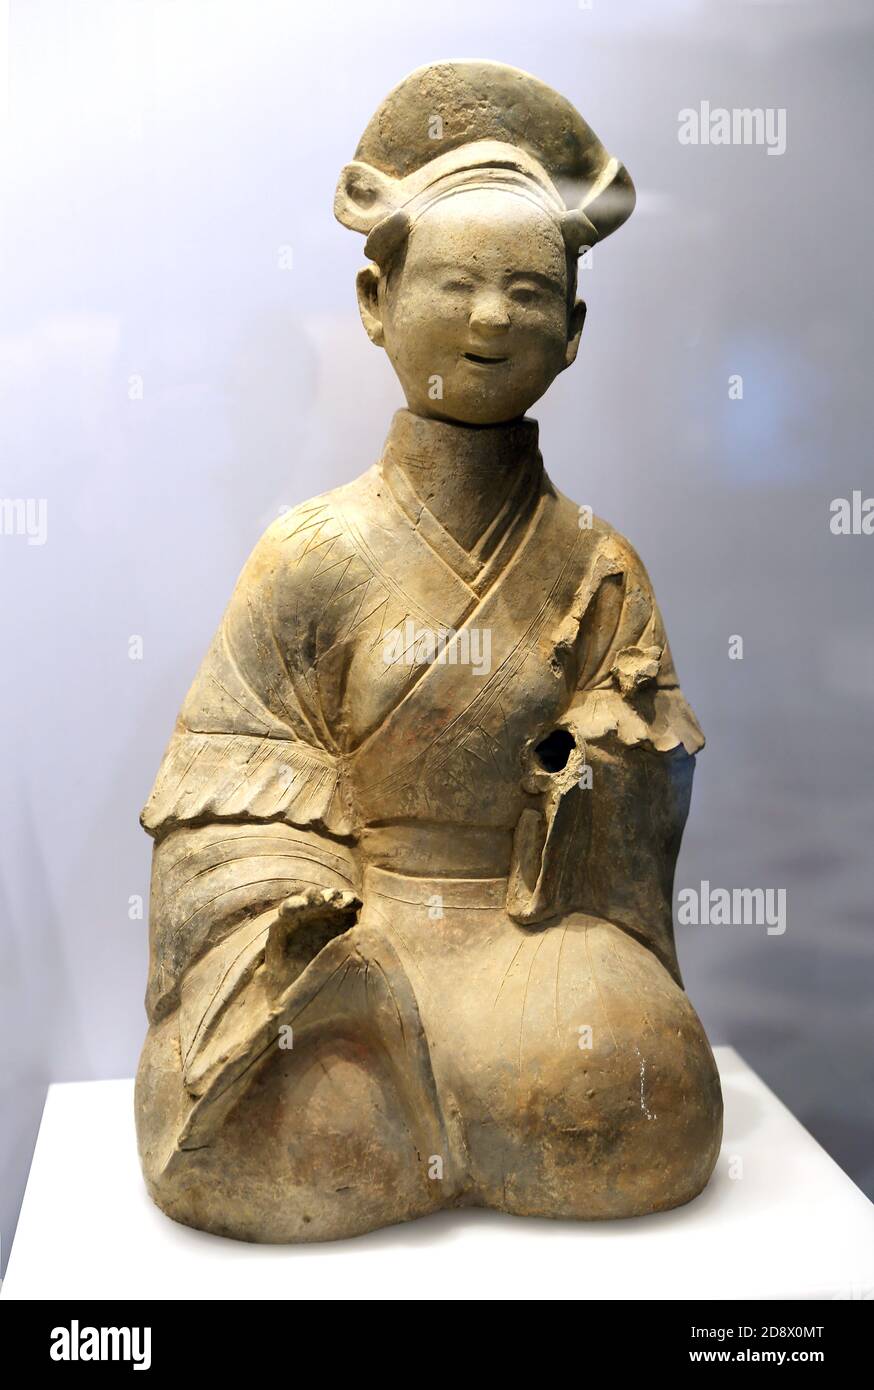 Una figurilla sentada. Período han (25-220 DC). Terracota. Estilo Sichuan. Sichuan. Museo de Sichuan, Chengdu Shi, China. Foto de stock